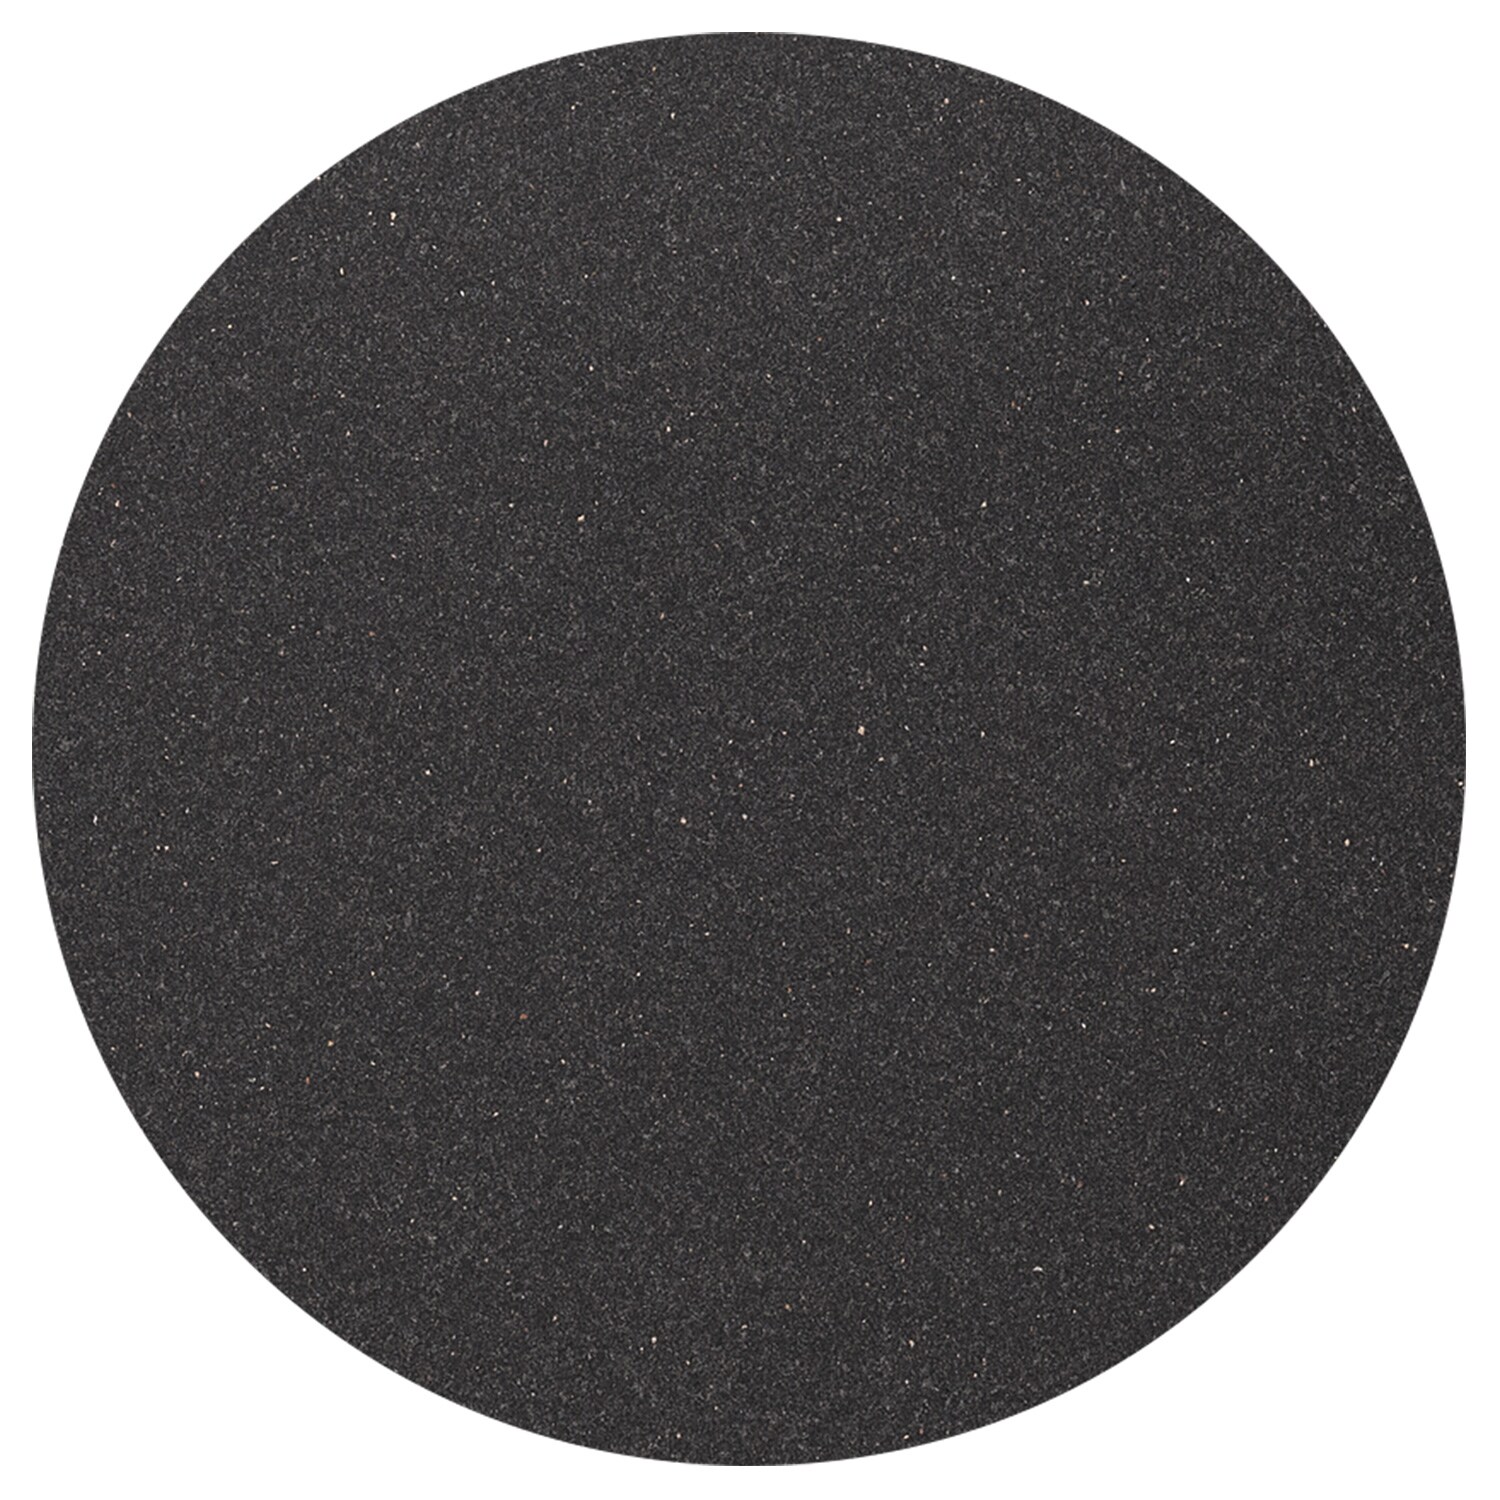 Lind Dna Circle Glasunderlägg Core 10 Cm Flecked Anthracite - Bordstabletter & Glasunderlägg Gummi Antracit